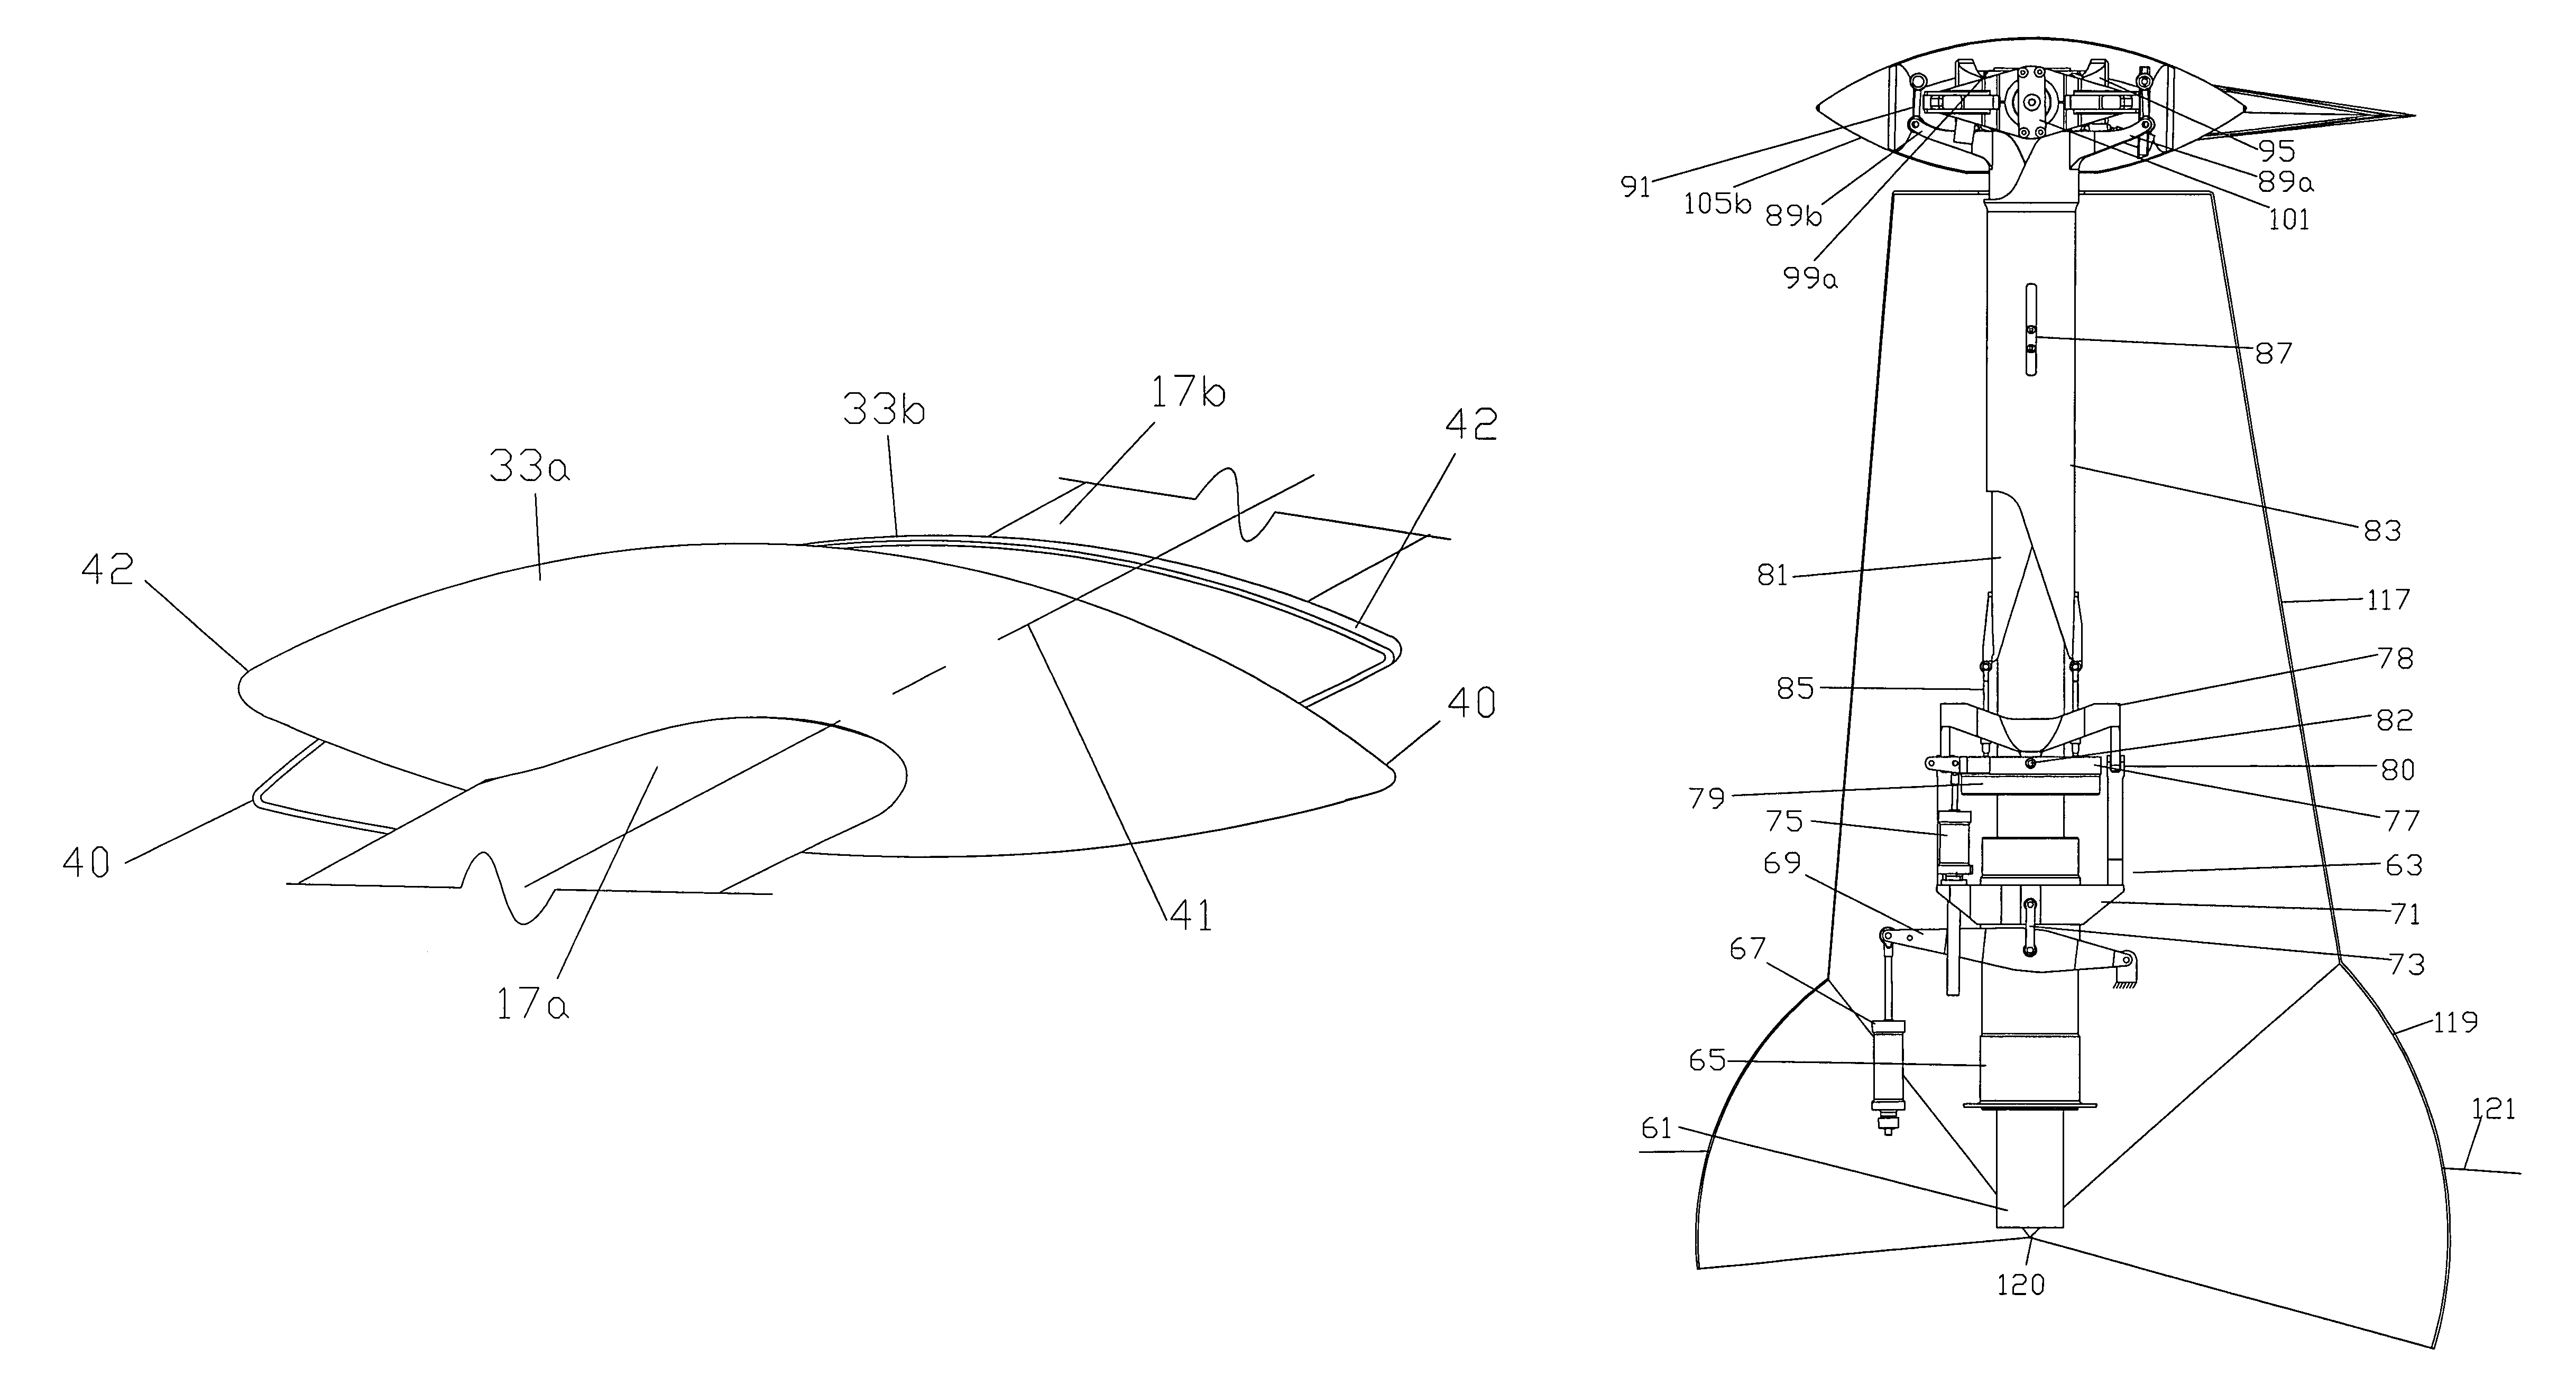 Rotor aircraft tilting hub with reduced drag rotor head and mast